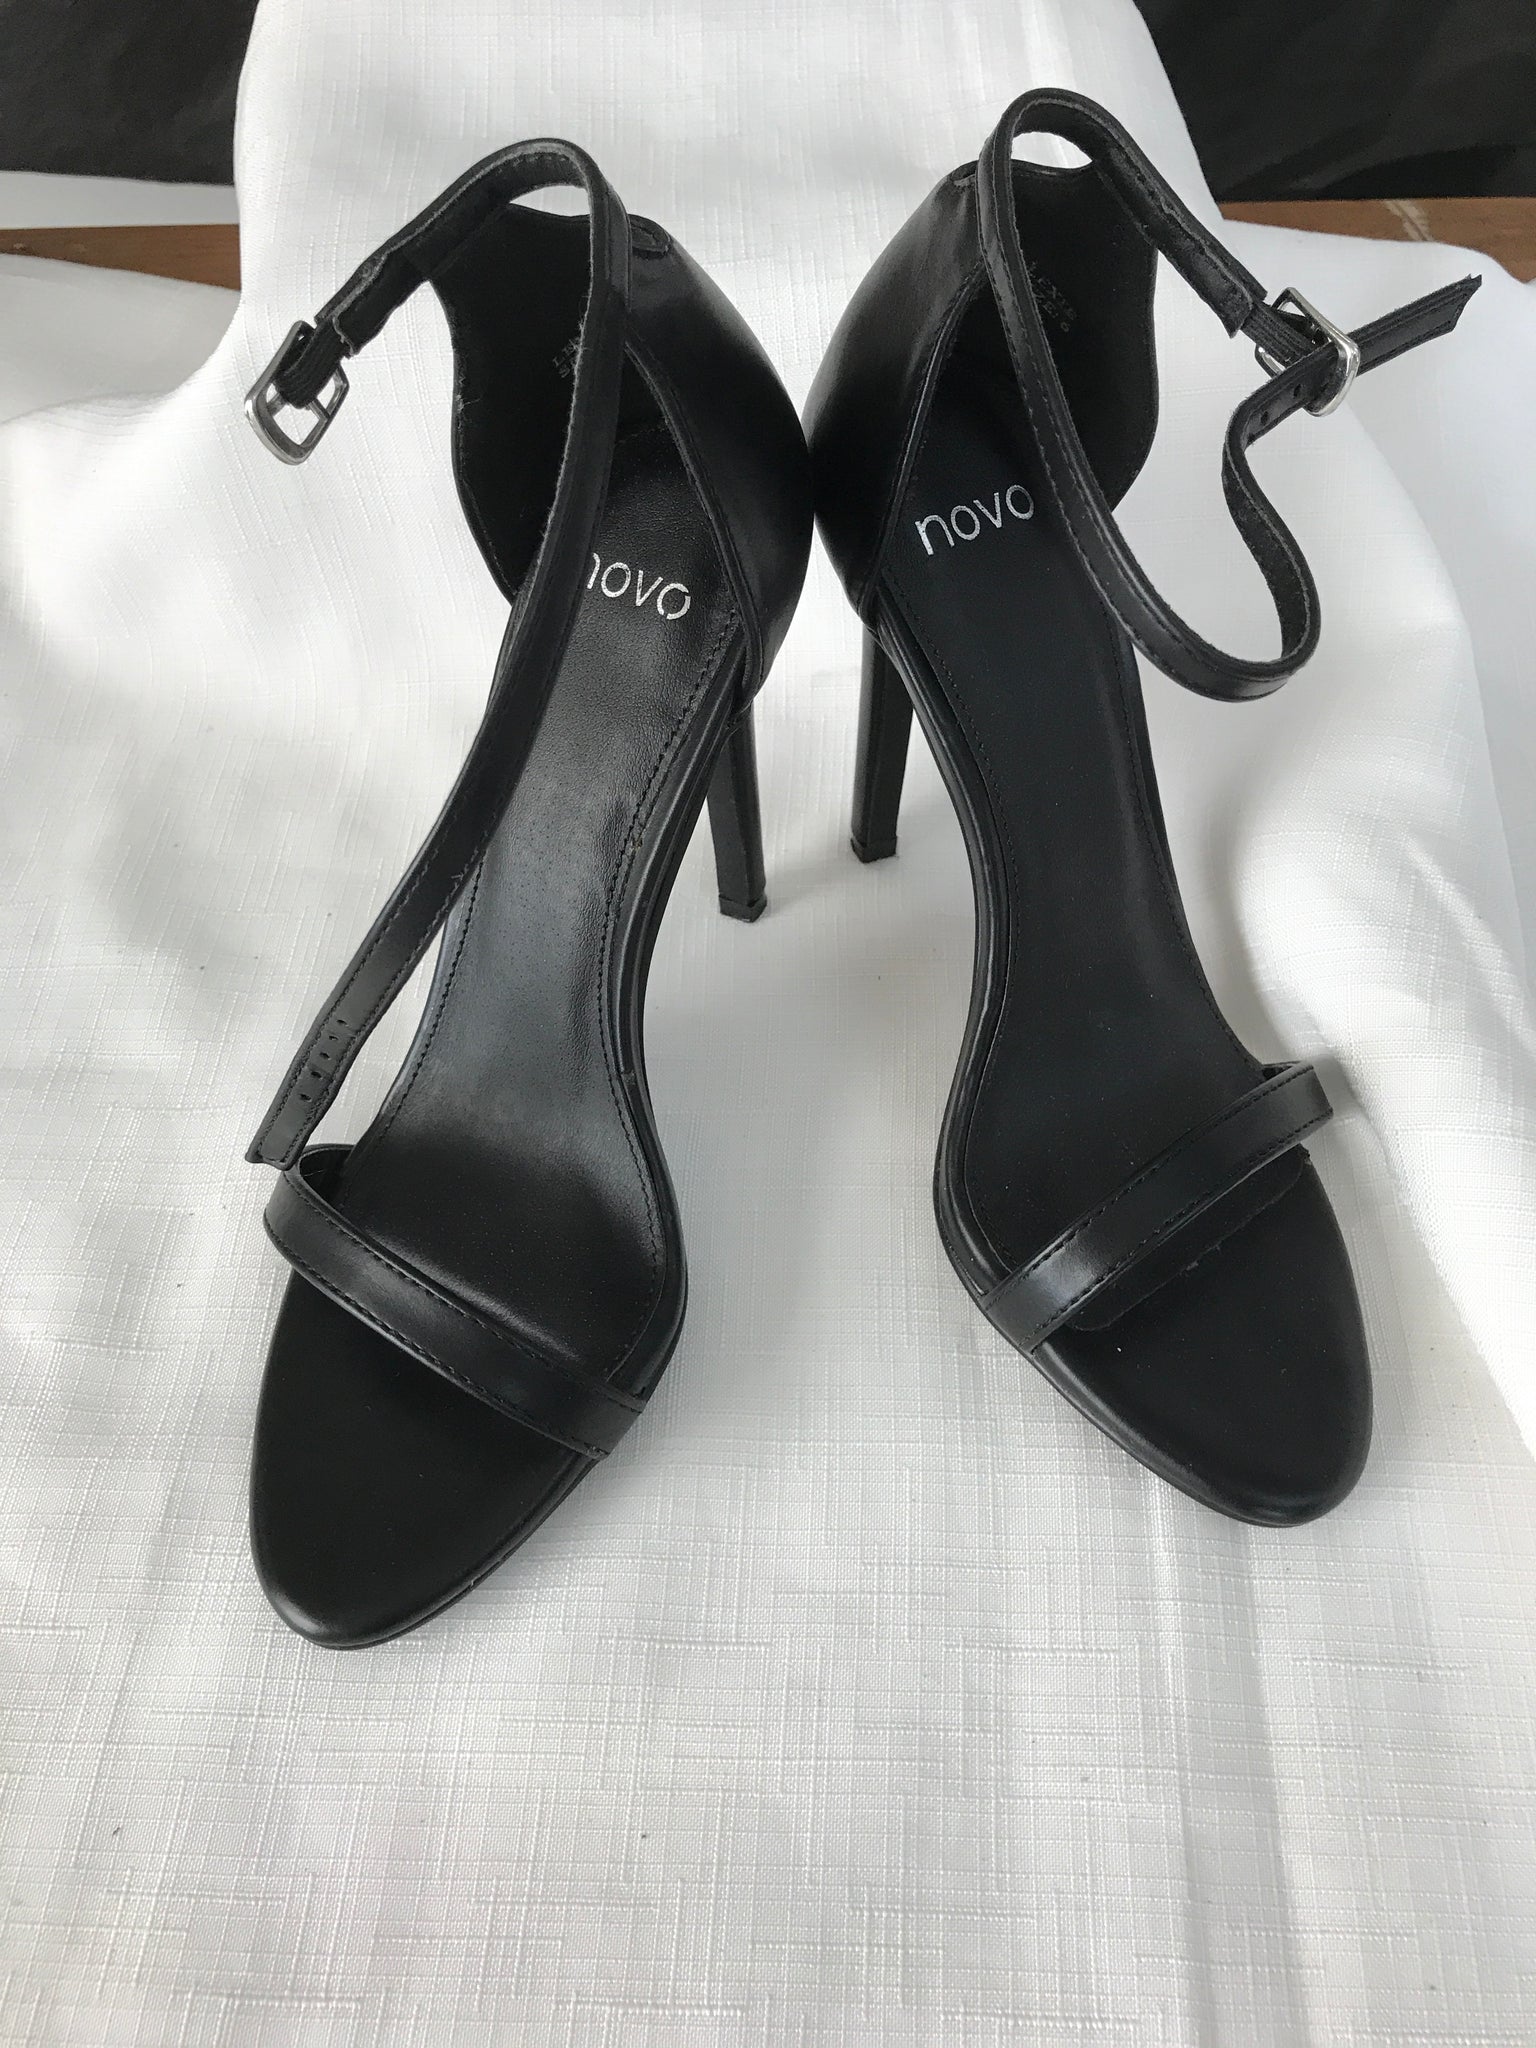 Novo black strap heels Size 6 – The Old 